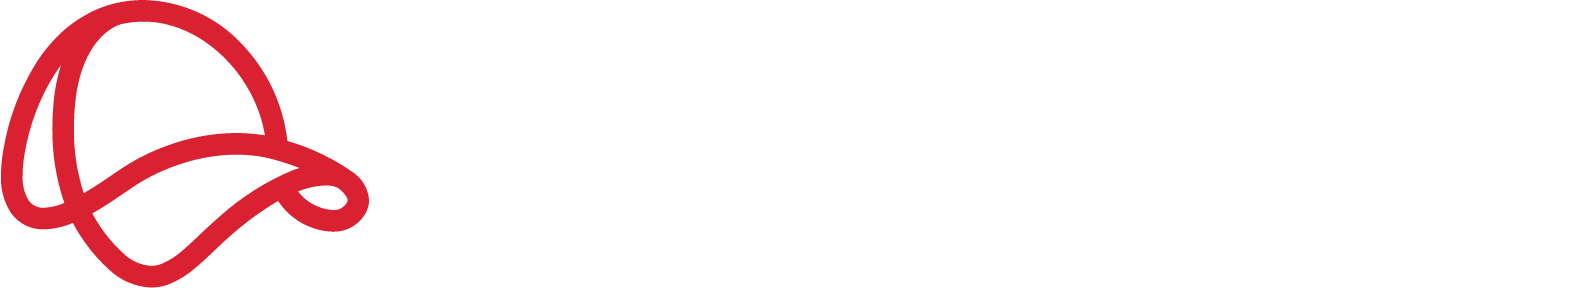 Mr Price Group Logo groß für dunkle Hintergründe (transparentes PNG)